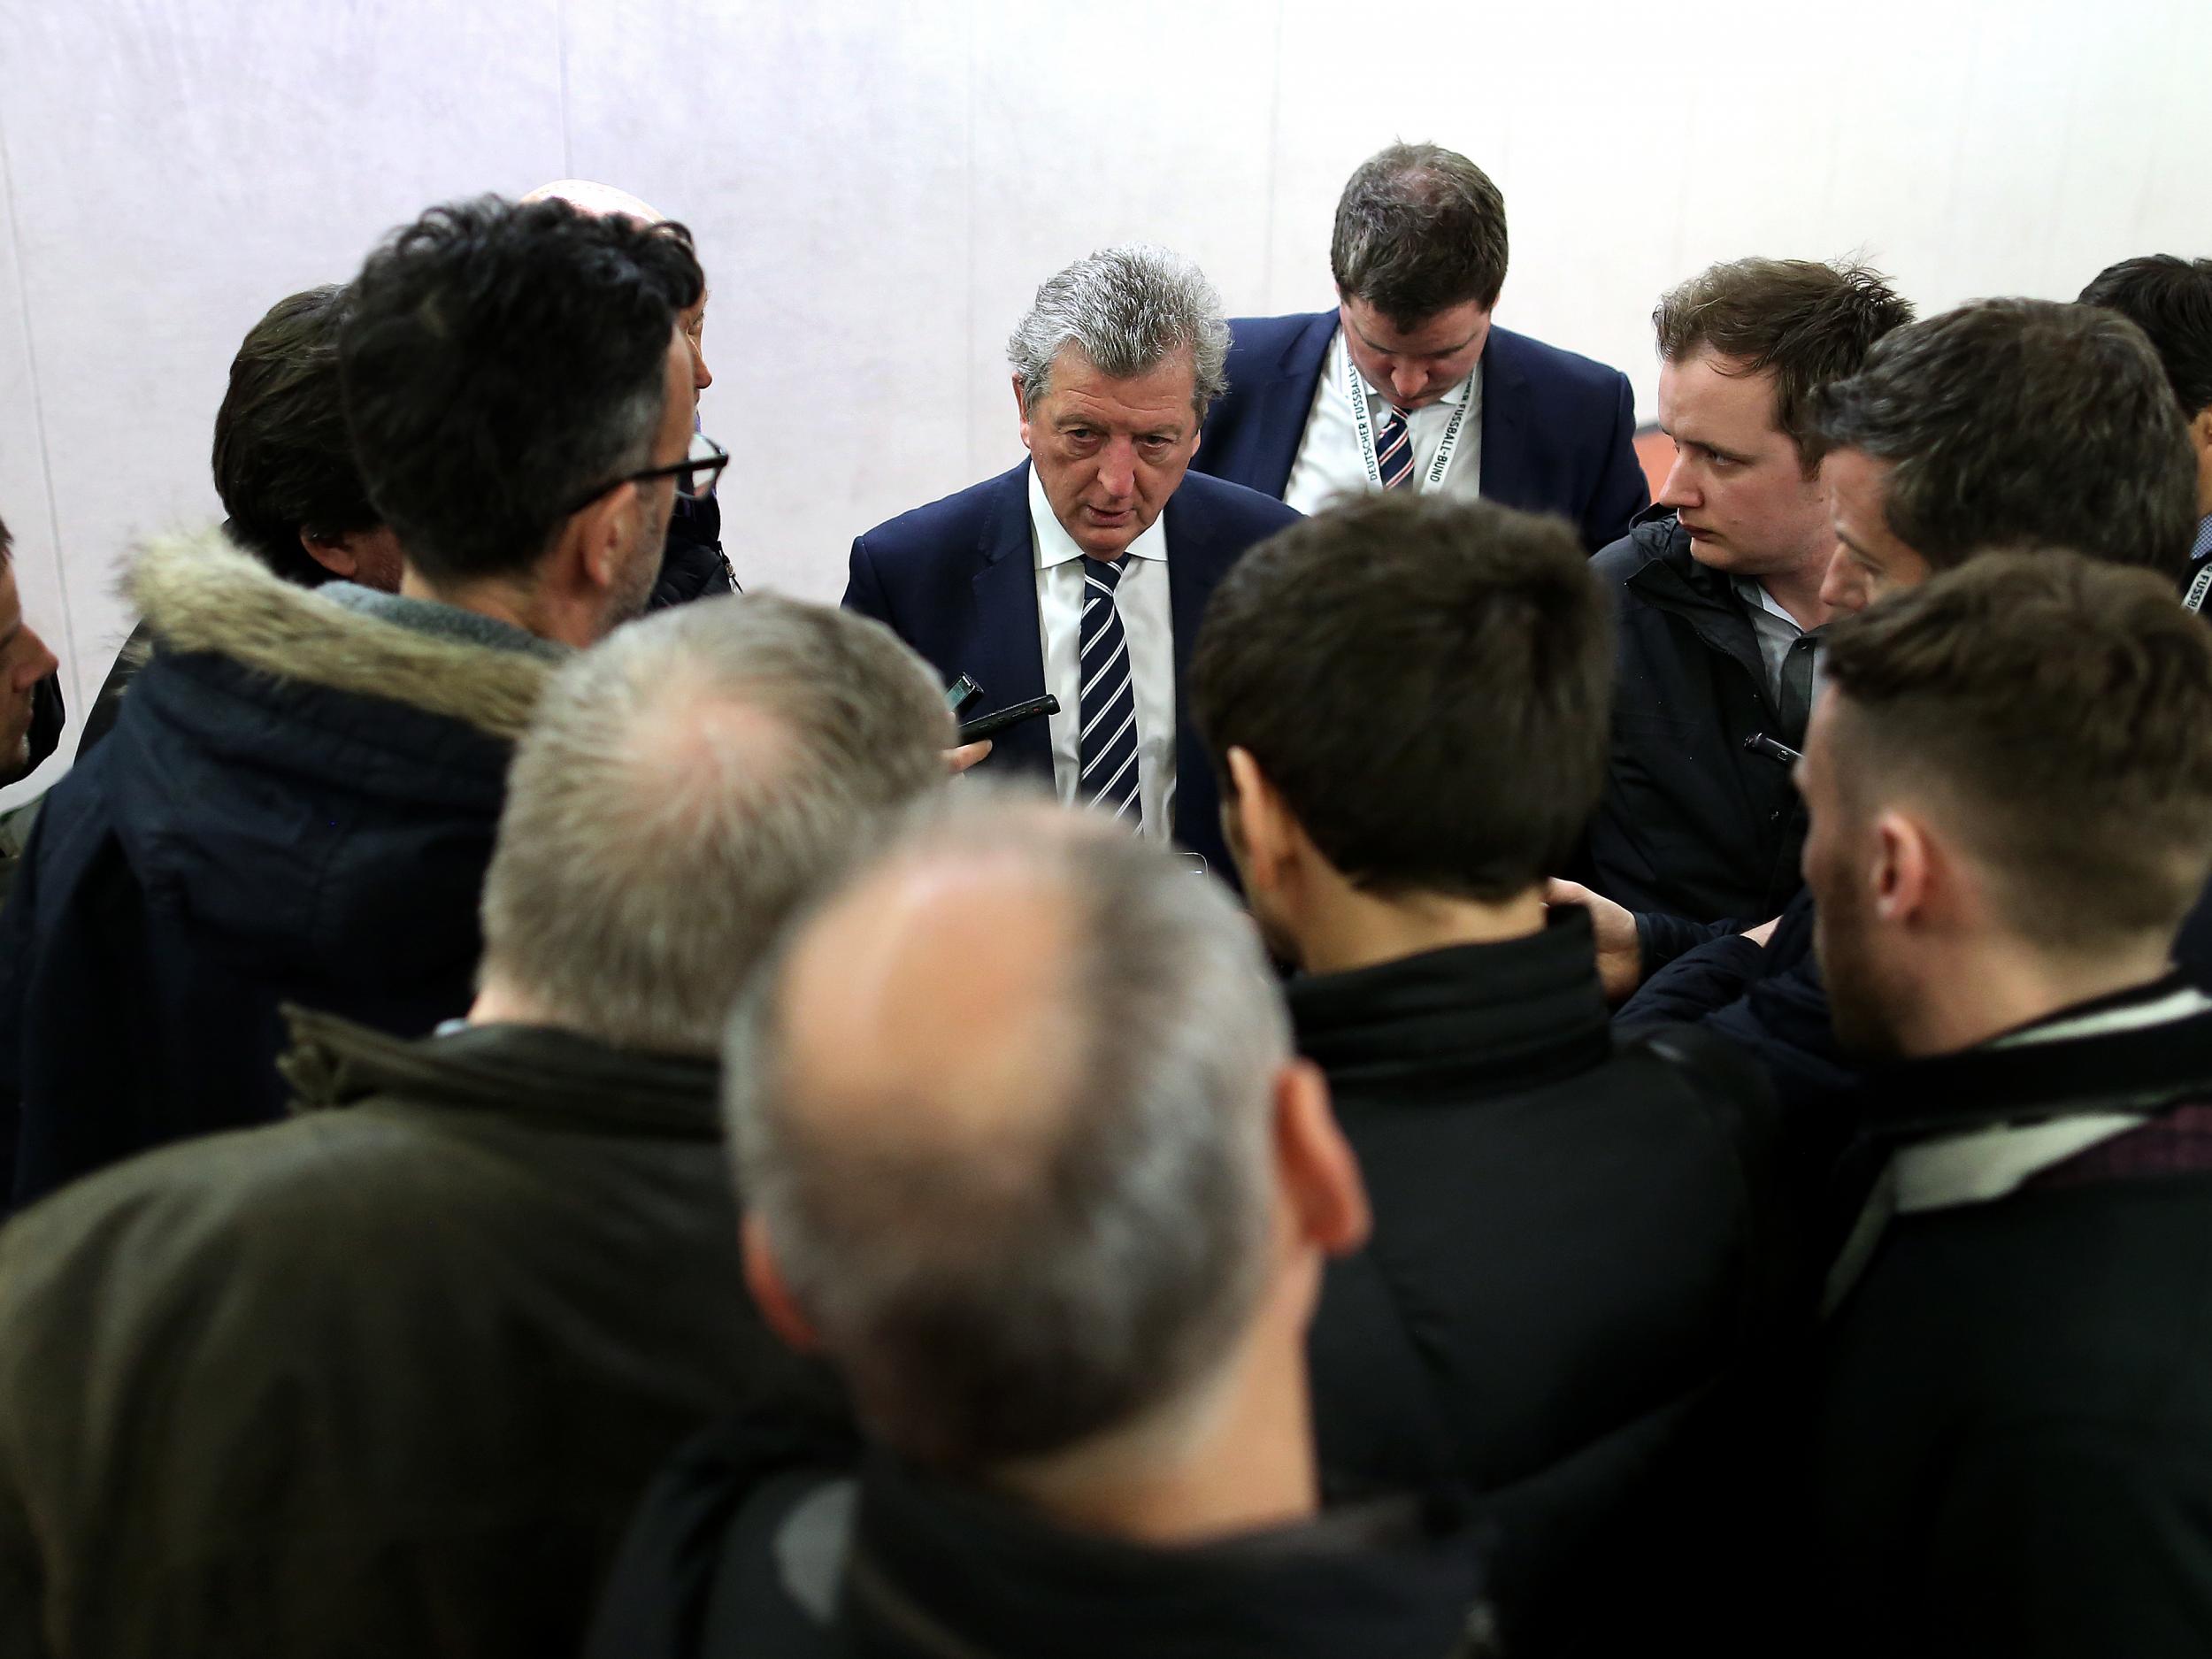 Roy Hodgson speaks with the media